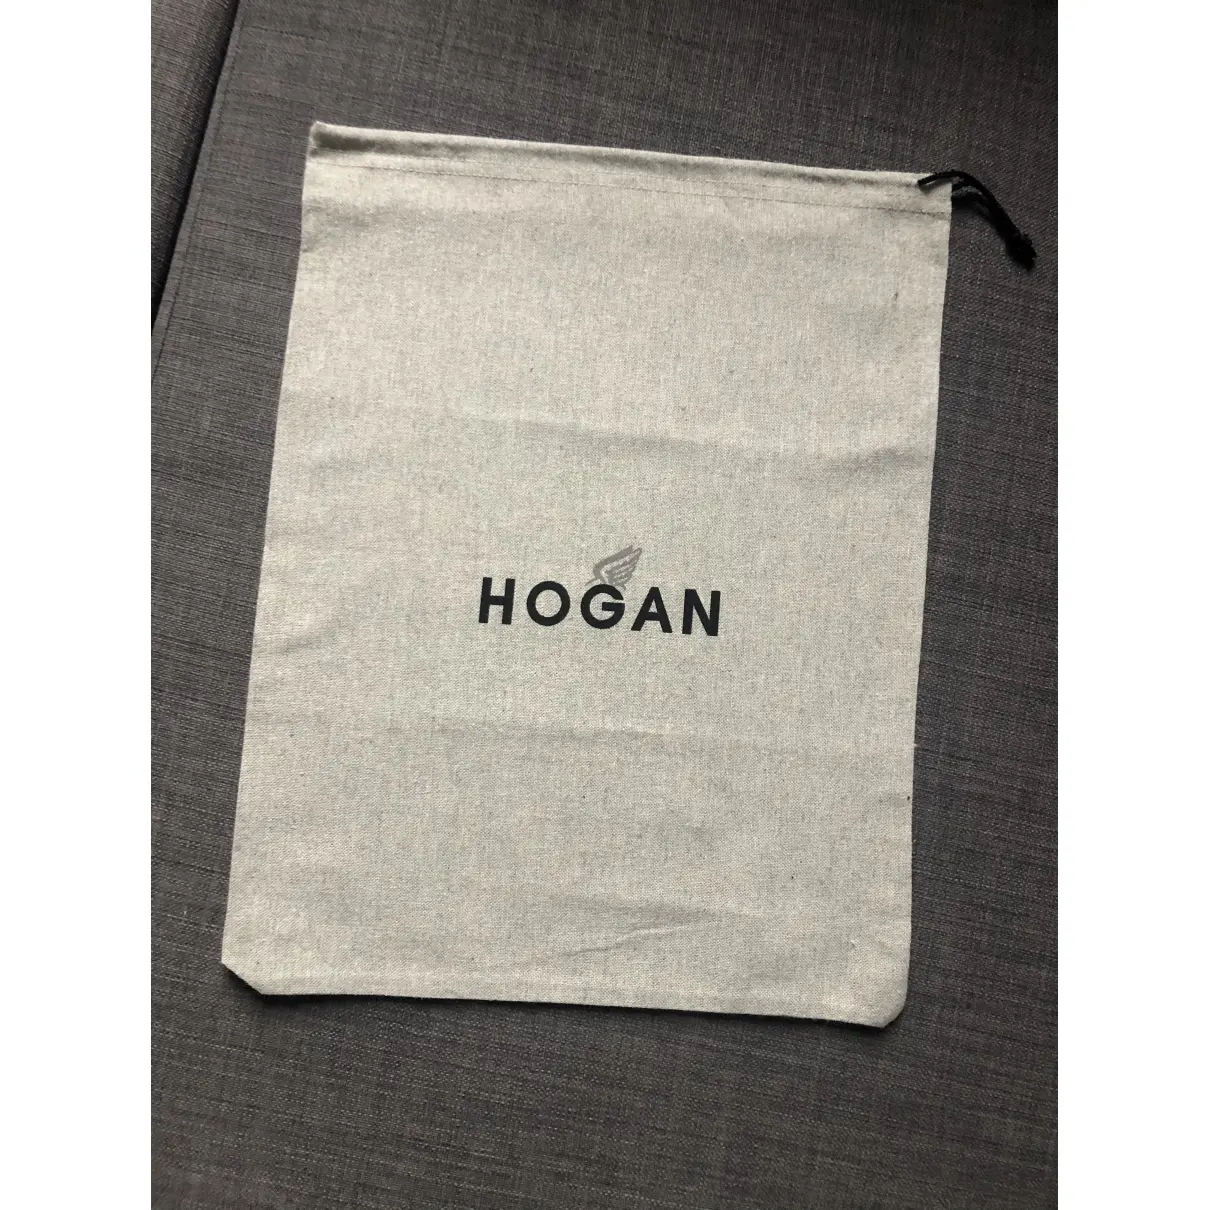 Buy Hogan Clutch bag online